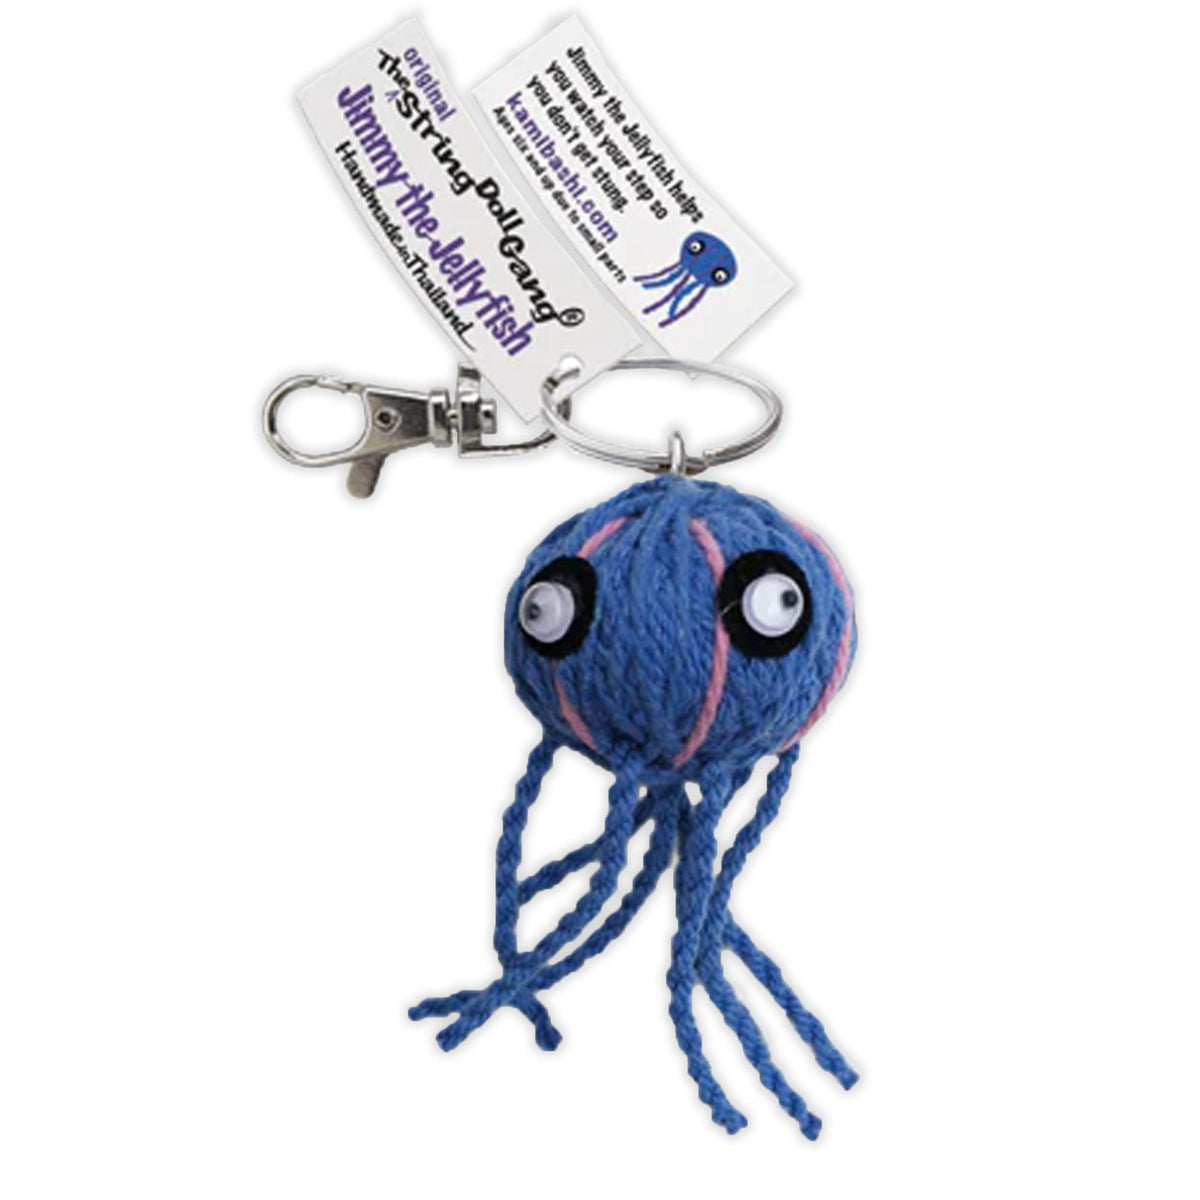 Tuskeegee Airman String Doll Keychain - Global Gifts